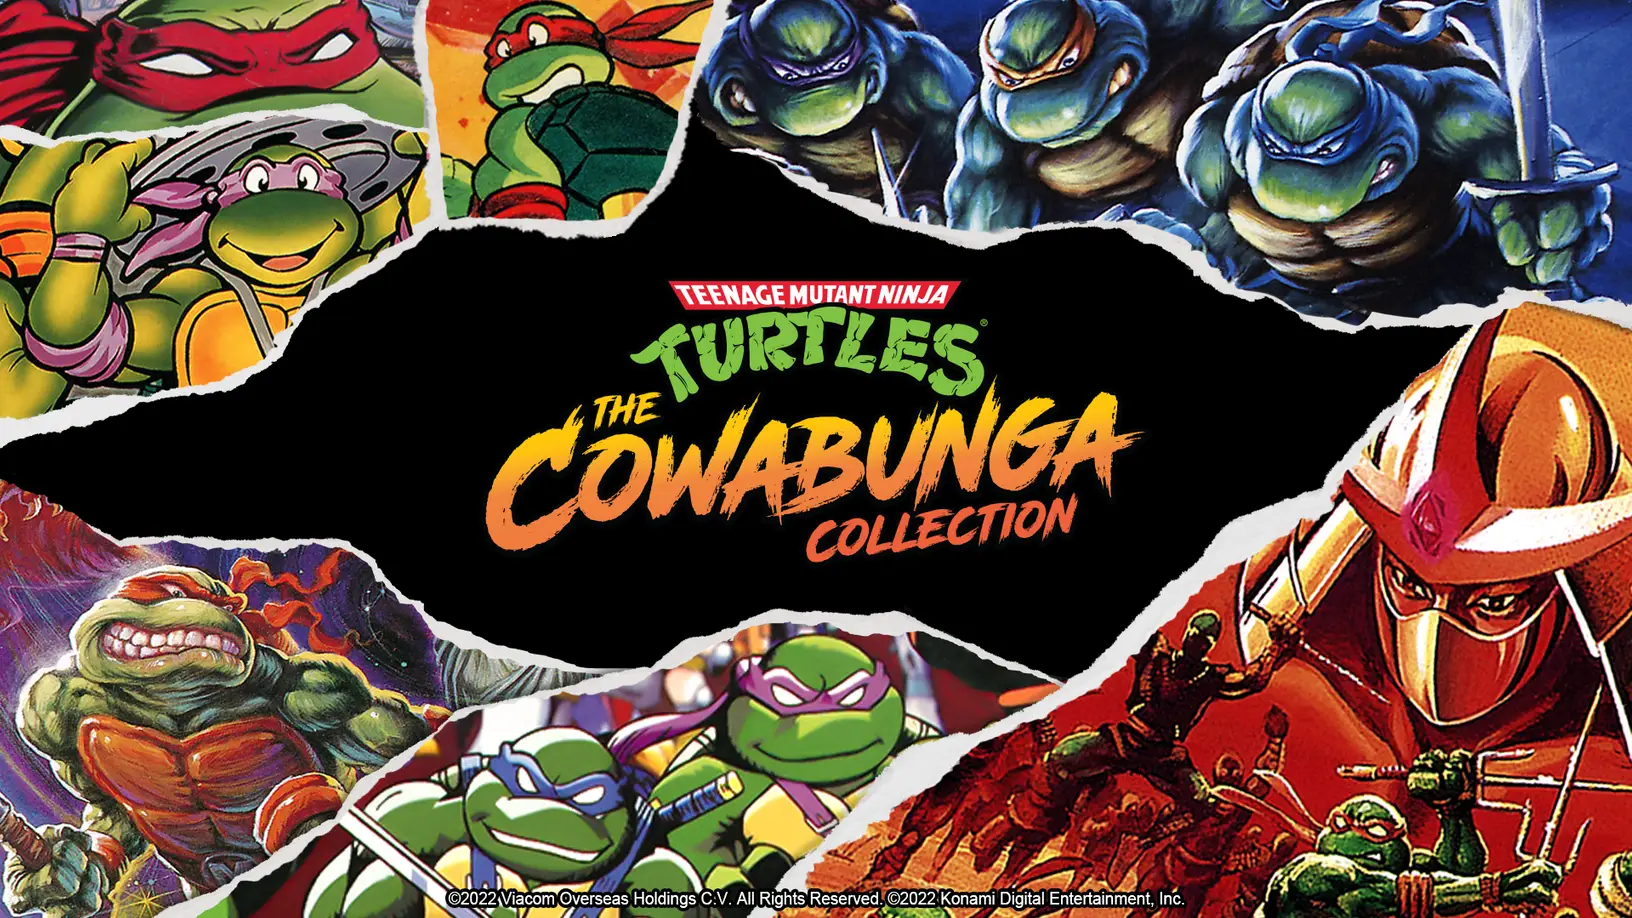 Imagem para Teenage Mutant Ninja Turtles: The Cowabunga Collection tem edição limitada de $150